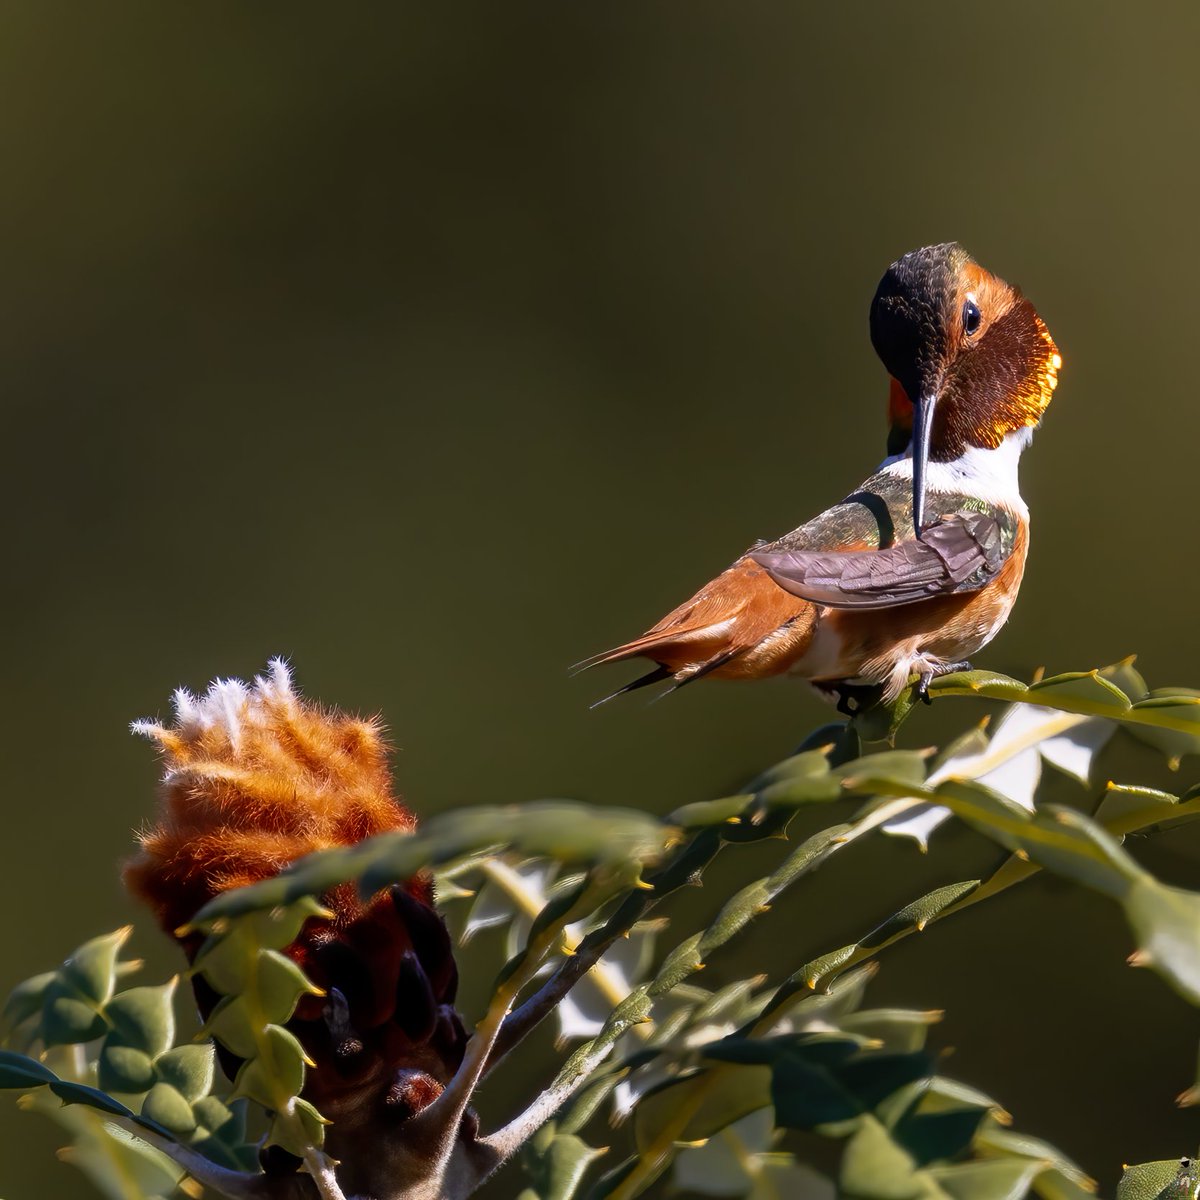 The copper-red throat patch on Allen's hummingbird resembles a gorget. #hummingbird #birds #nature #bird #hummingbirds #wildlife #birdphotography #photography #flowers #birdlovers #bestbirdshots #canon #allenshummingbird